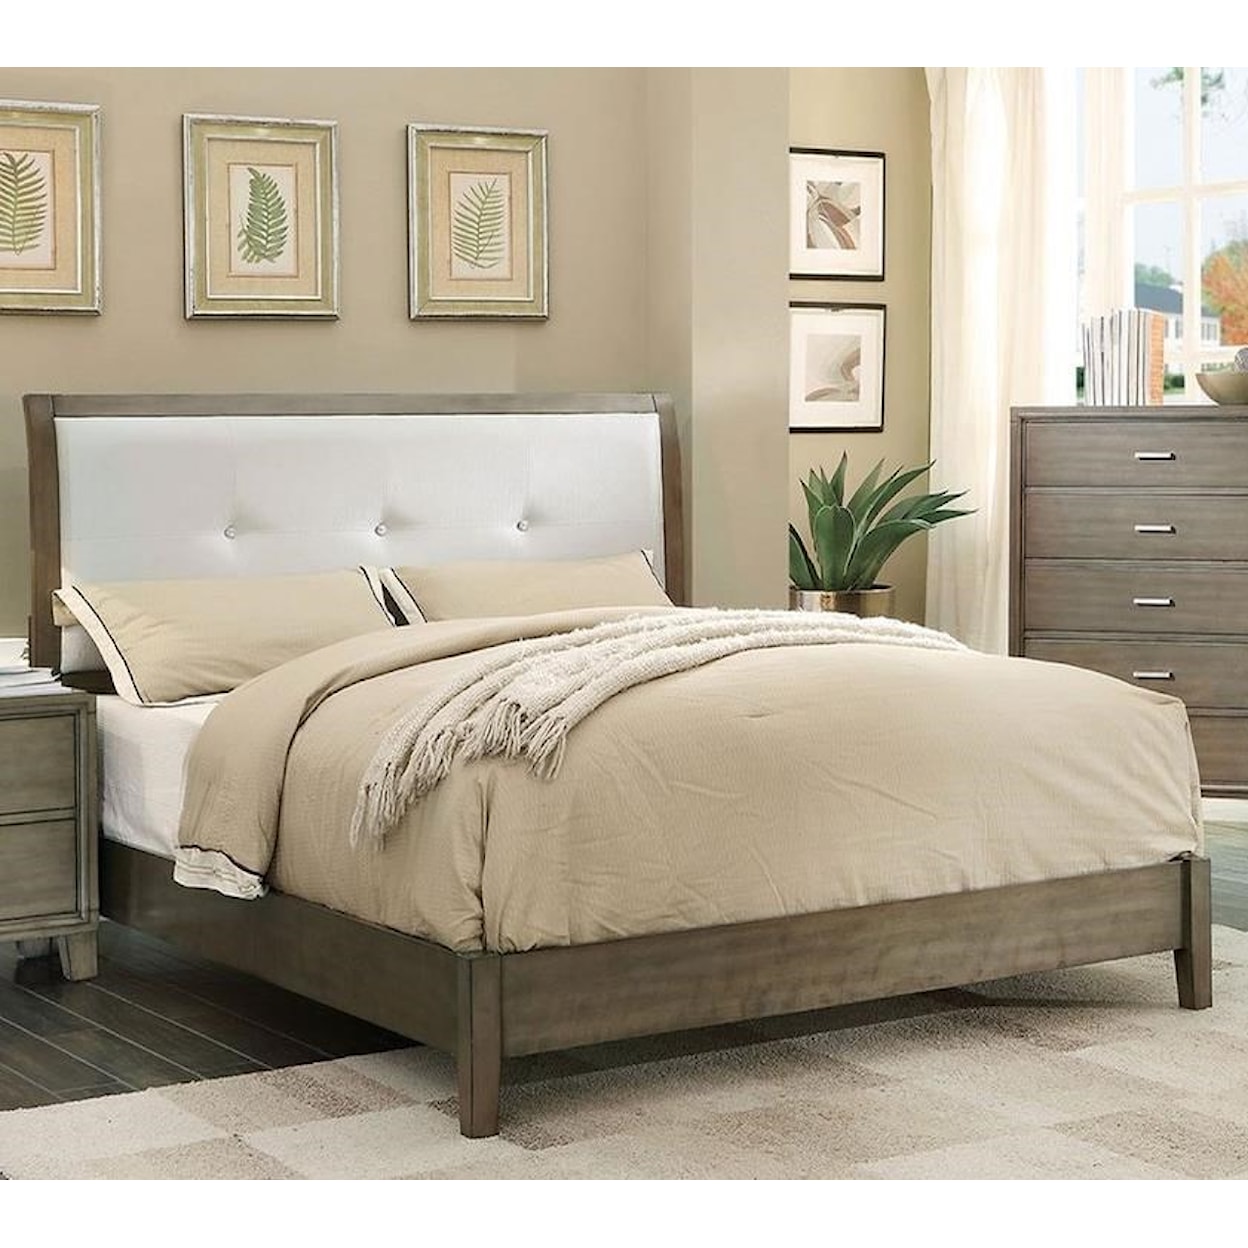 Furniture of America Enrico King Upholstered Bed